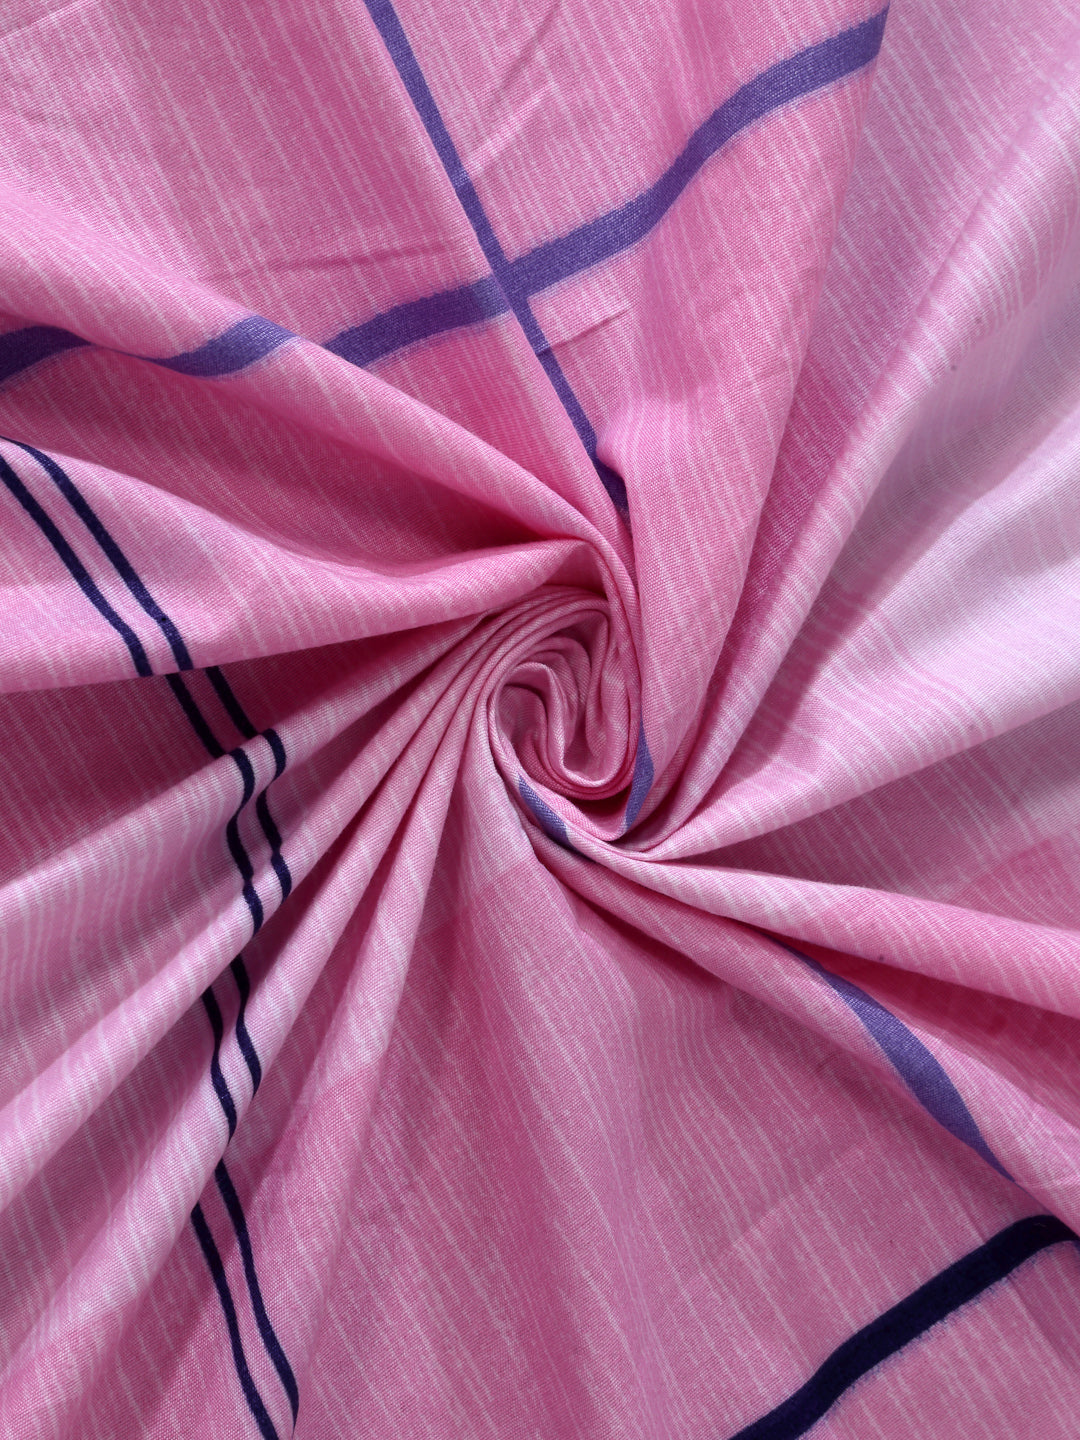 Arrabi Pink Geometric TC Cotton Blend Single Size Bedsheet with 1 Pillow Cover (215 x 150 cm)